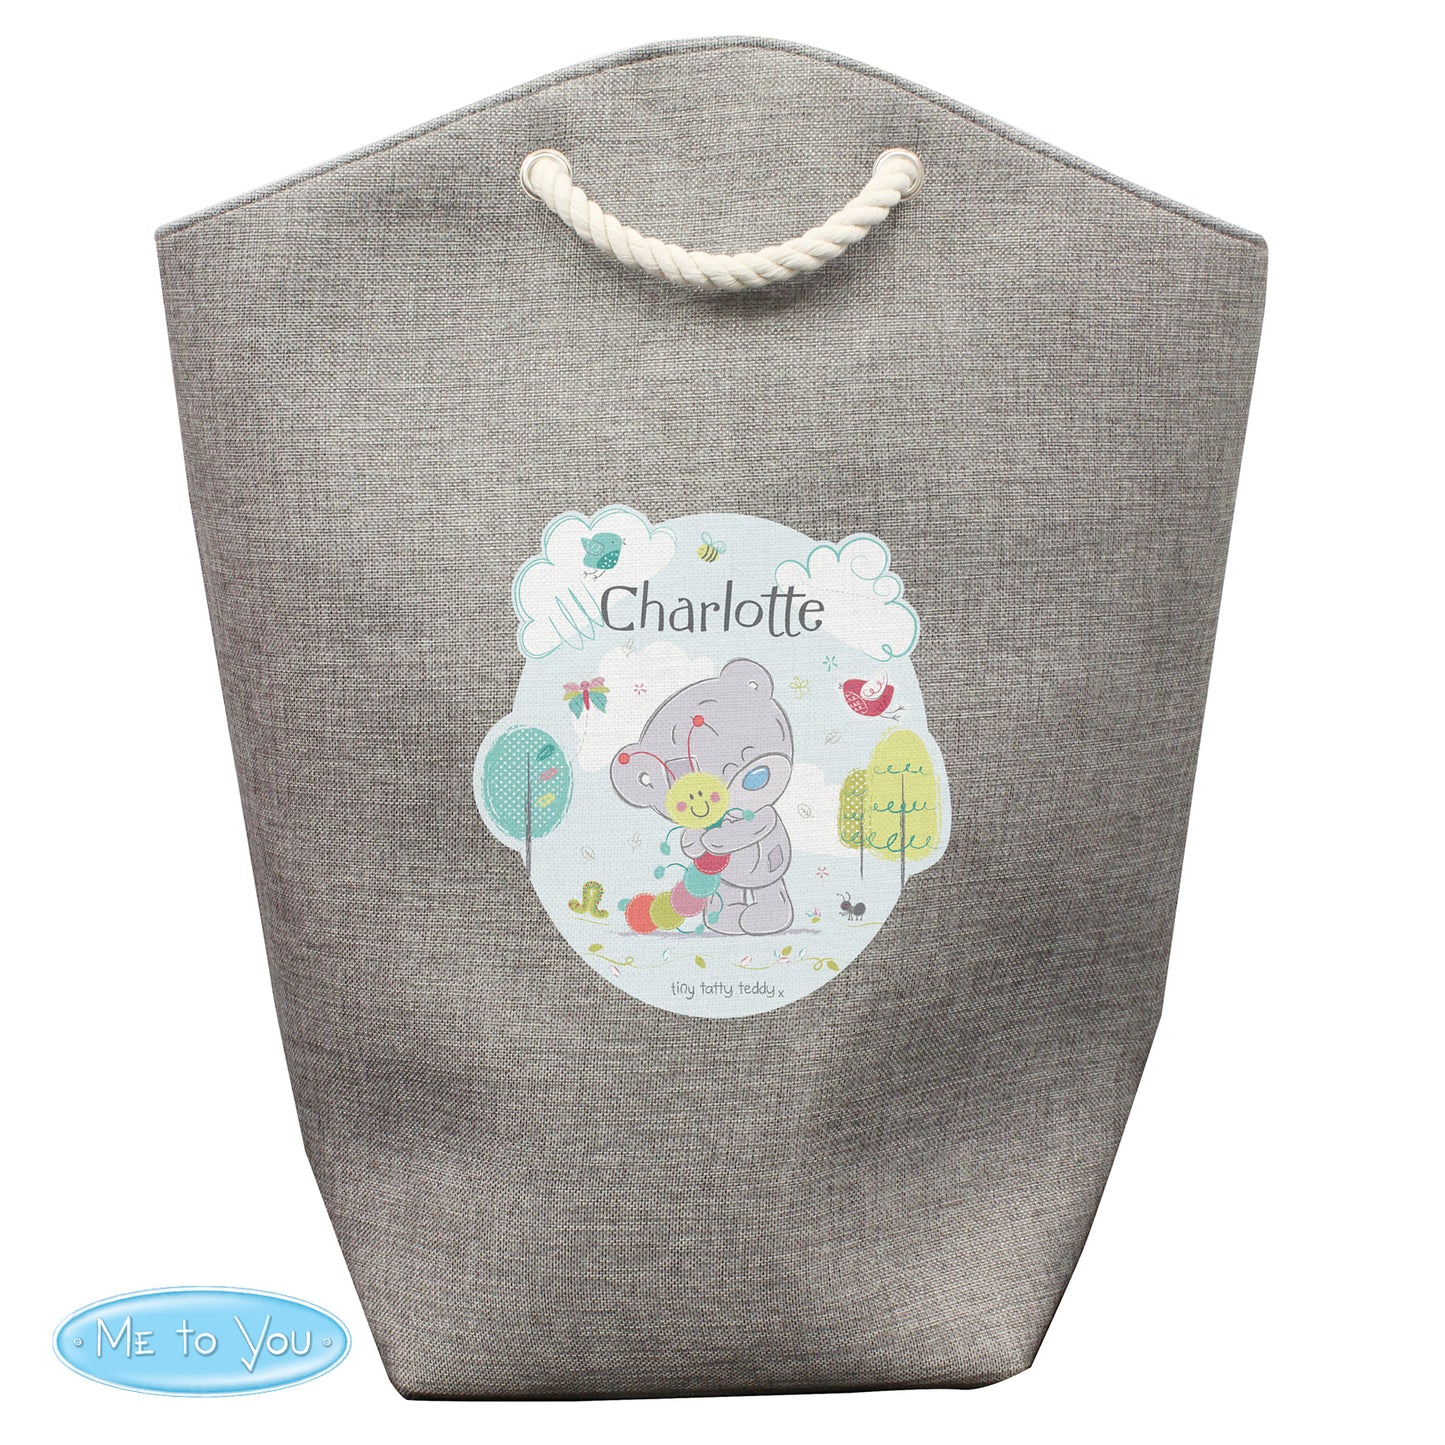 Personalised Storage/Laundry Bag - Tatty Teddy - Violet Belle Gifts - Personalised Storage/Laundry Bag - Tatty Teddy